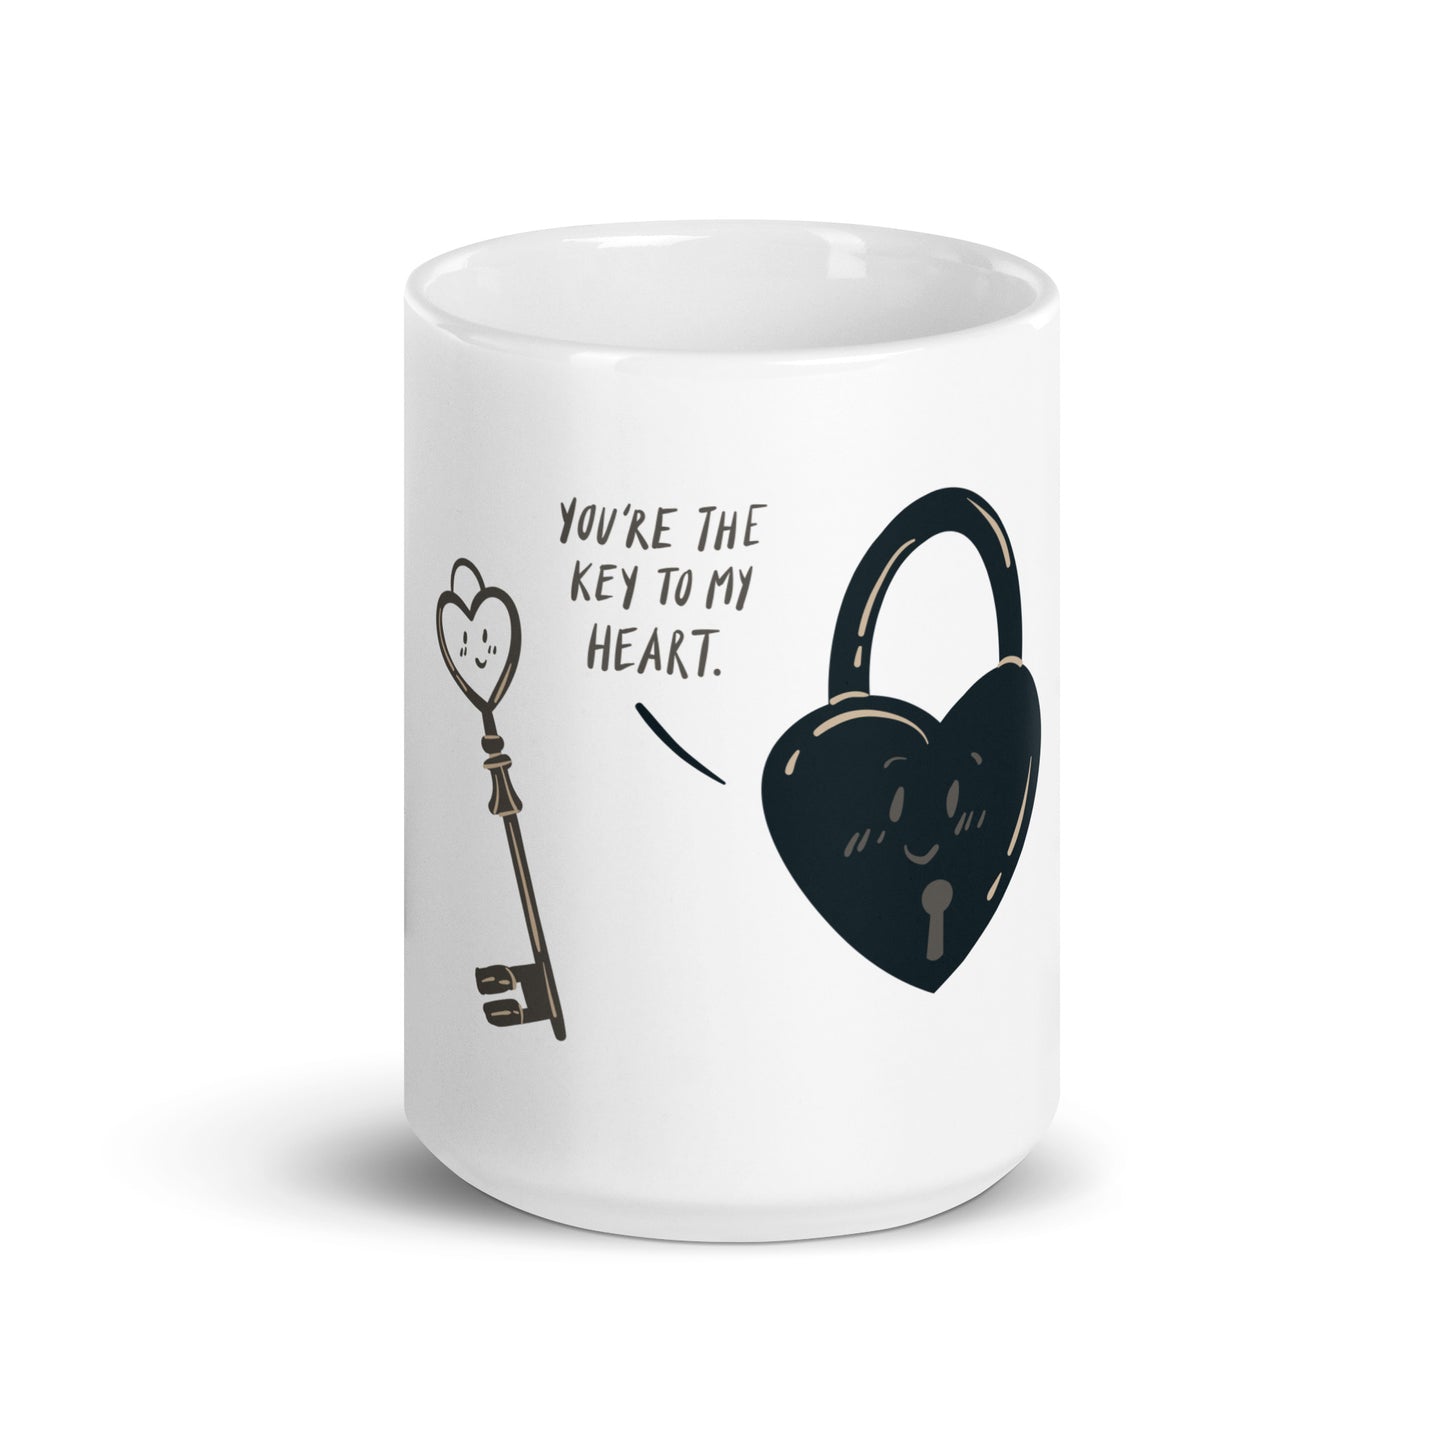 You're the Key to My Heart - White Glossy Mug for Romantic Moments | Heartfelt Gift Idea